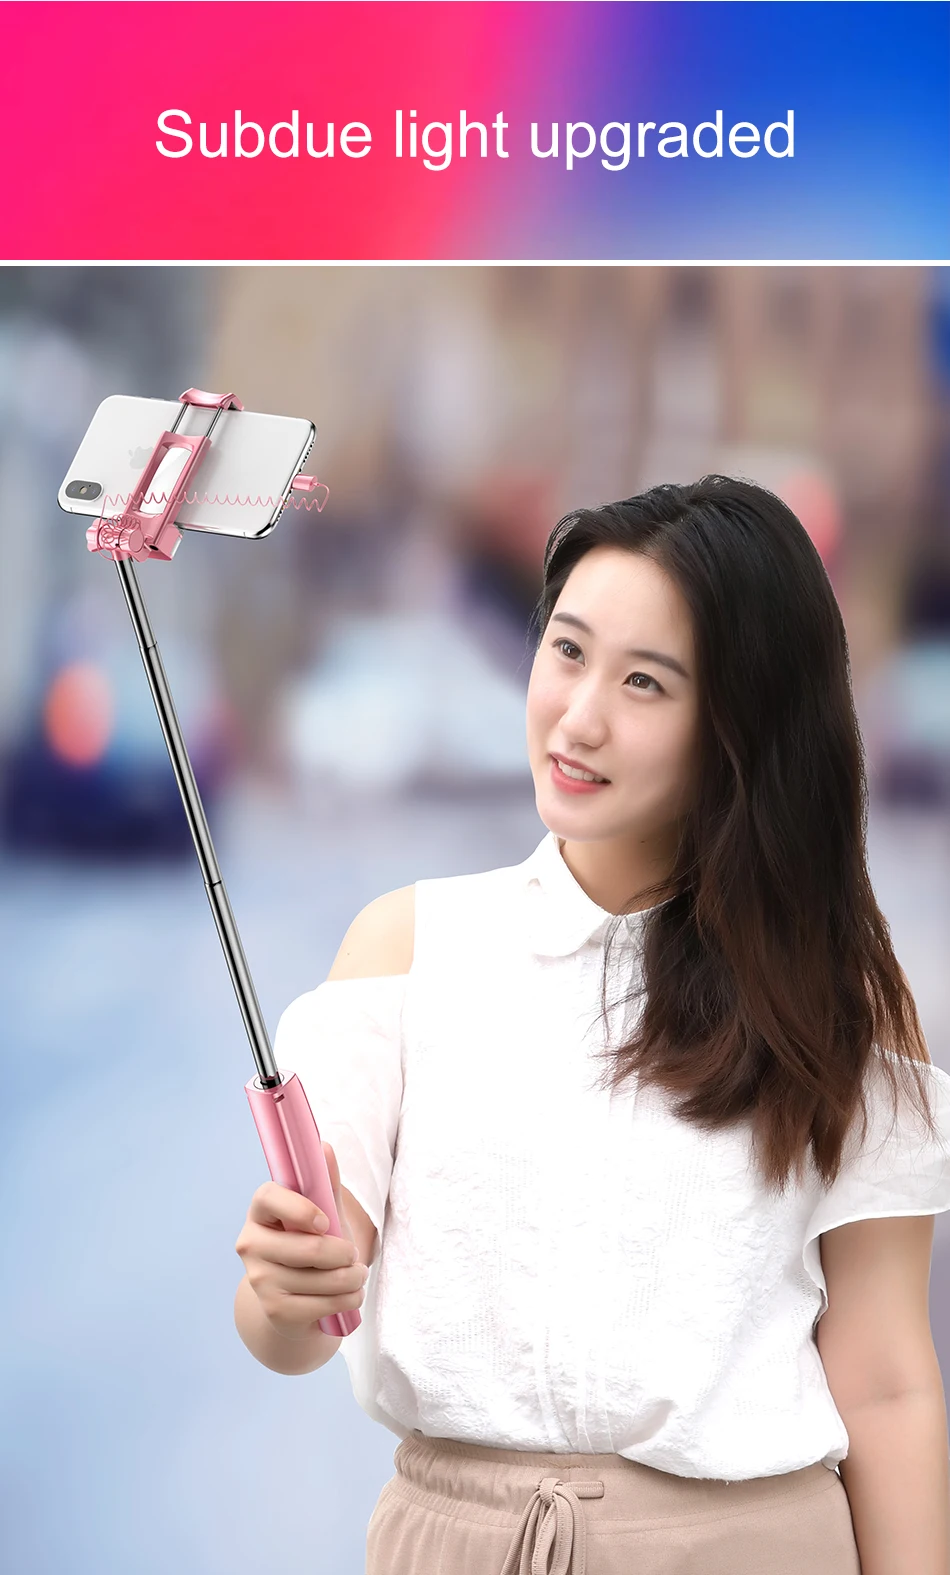 Складная селфи-палка Baseus Bluetooth Selfiestick+ Mirro+ заполняющий свет монопод для iPhone samsung Xiaomi Android Phone Stick